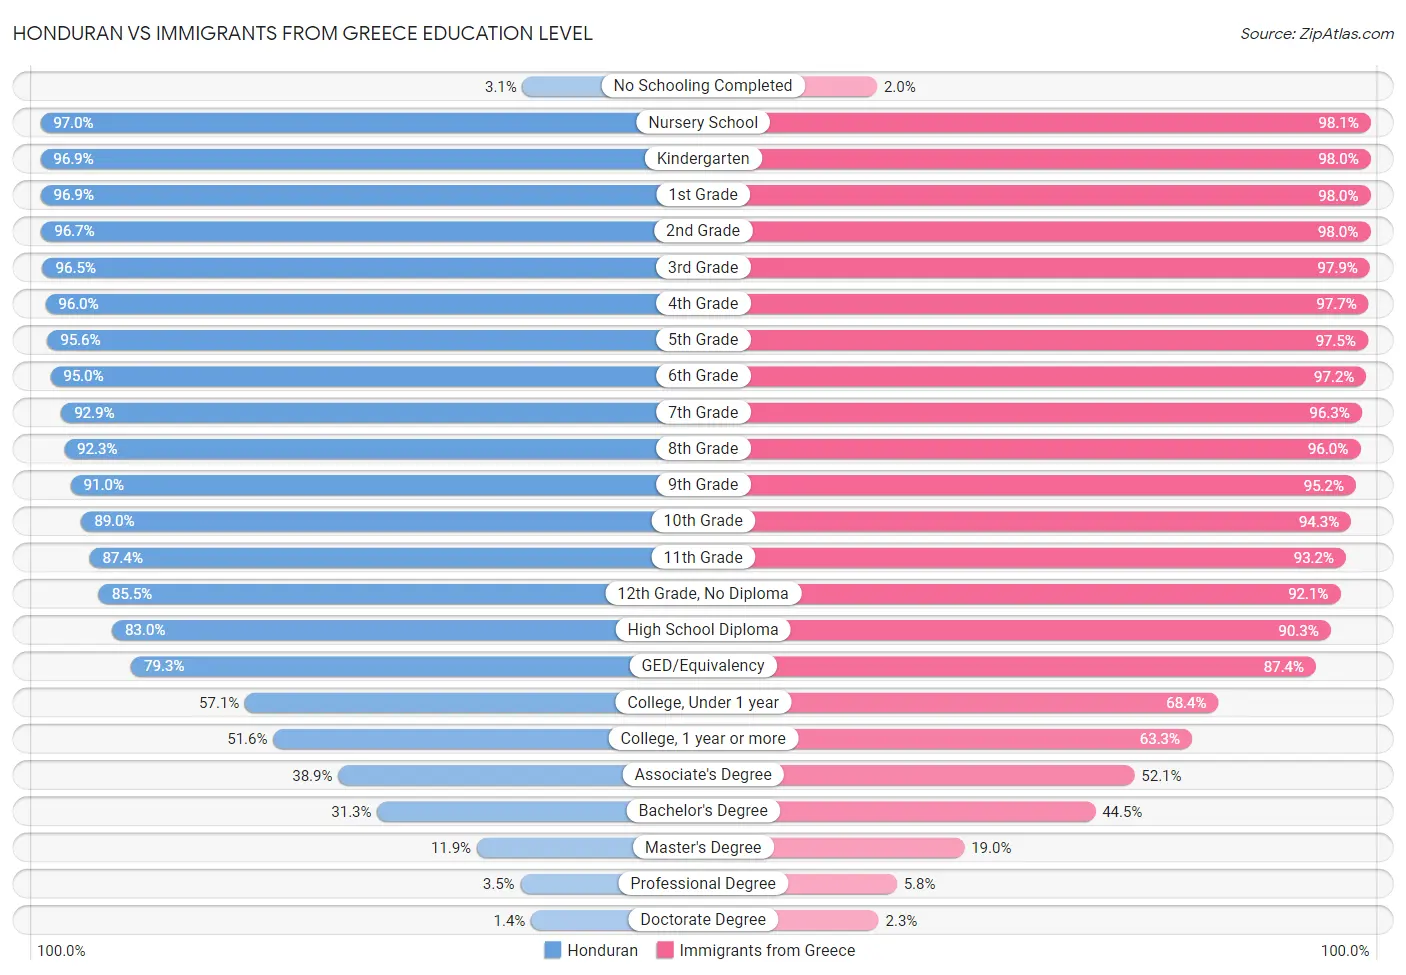 Honduran vs Immigrants from Greece Education Level